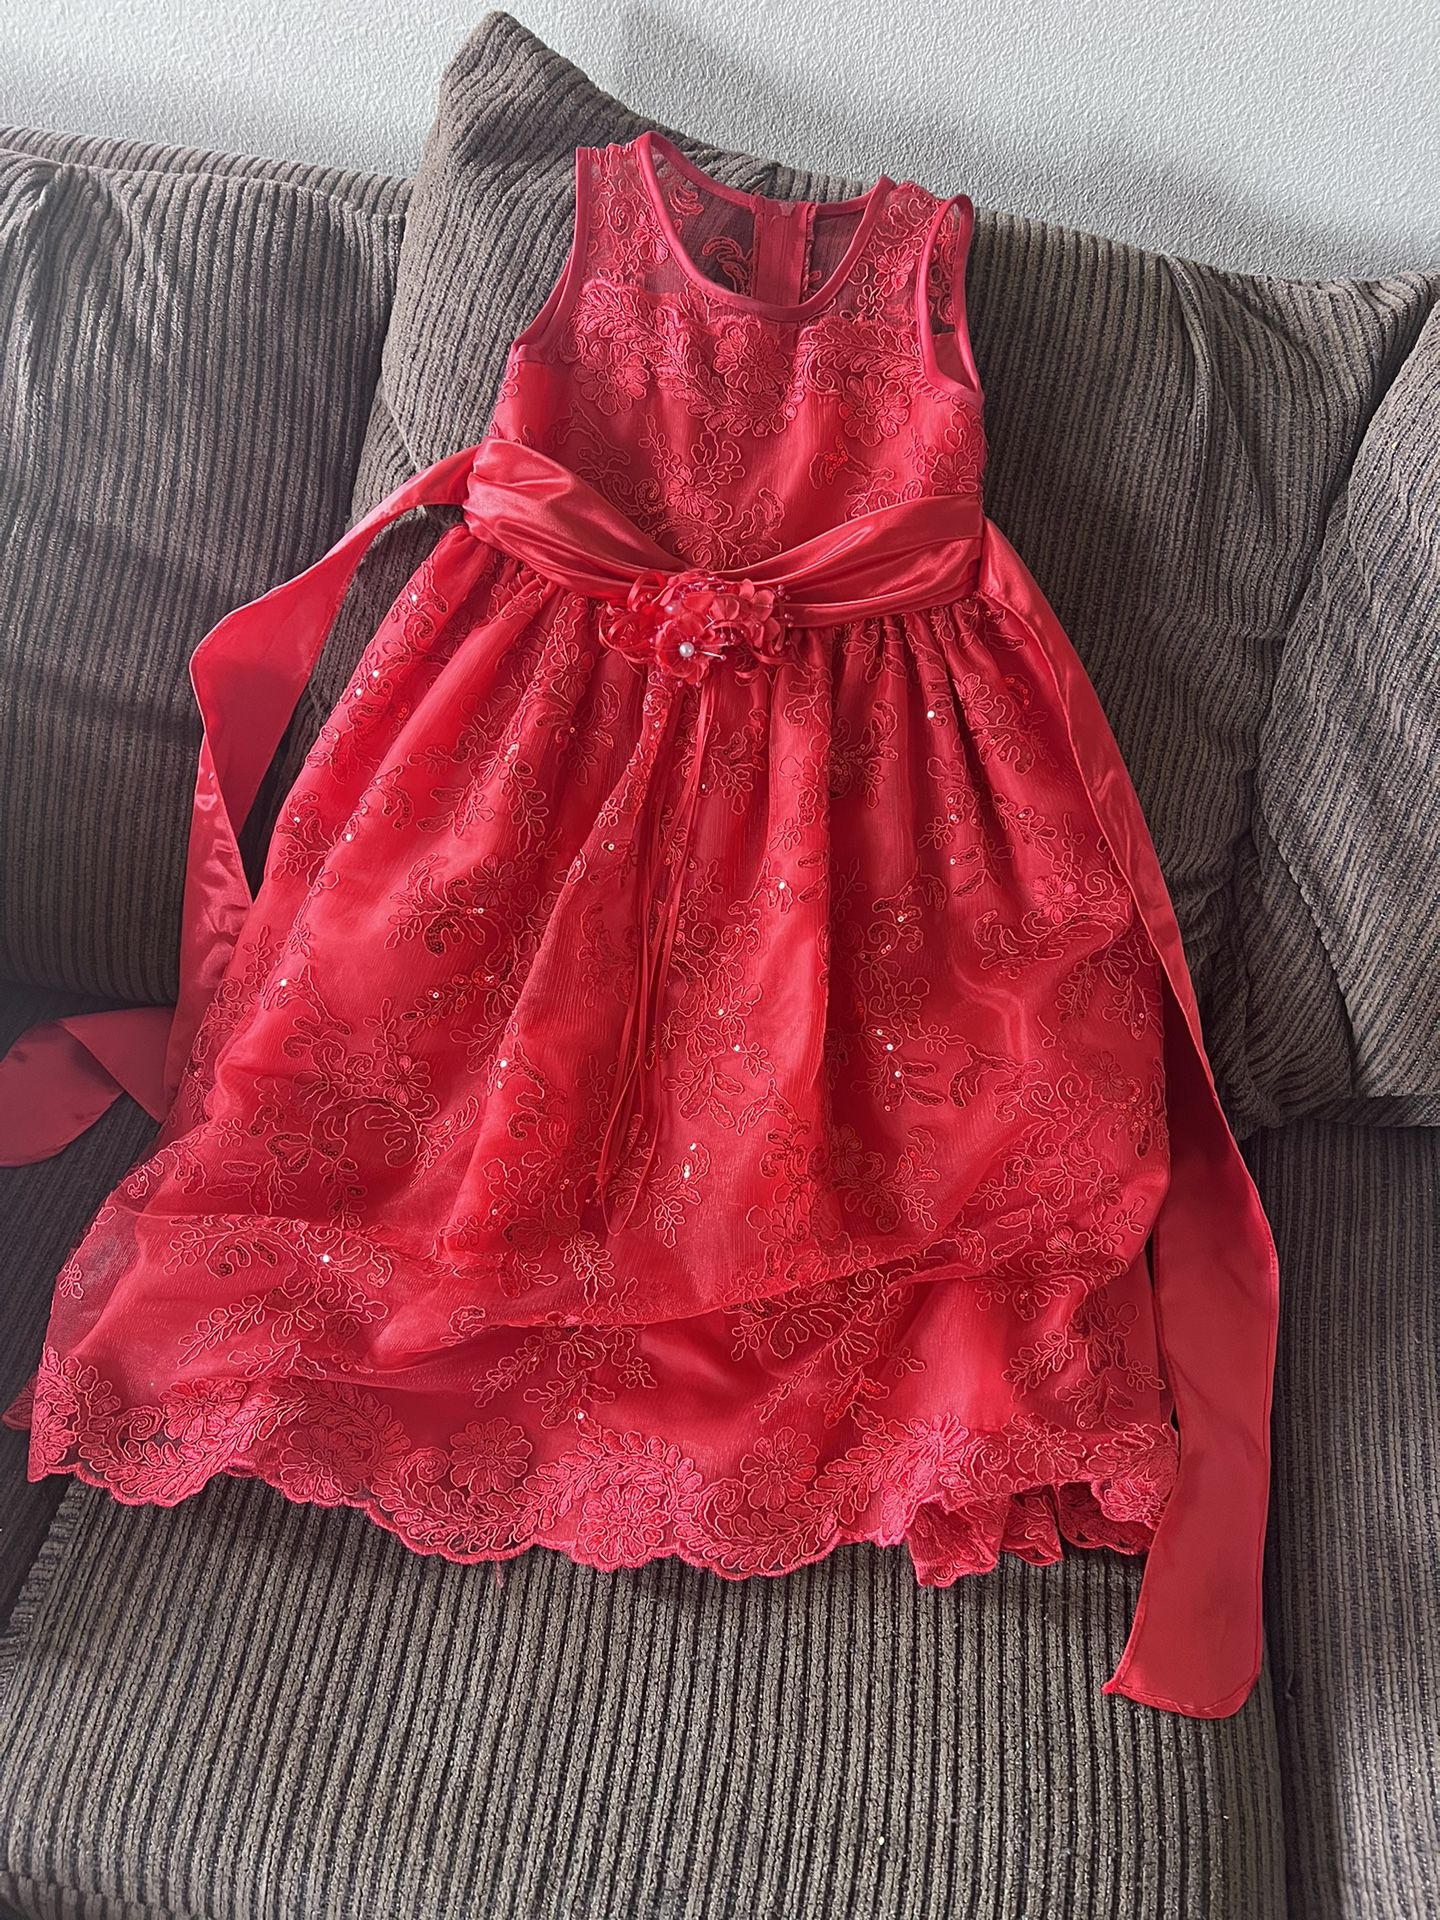 Size 5-6 Dress